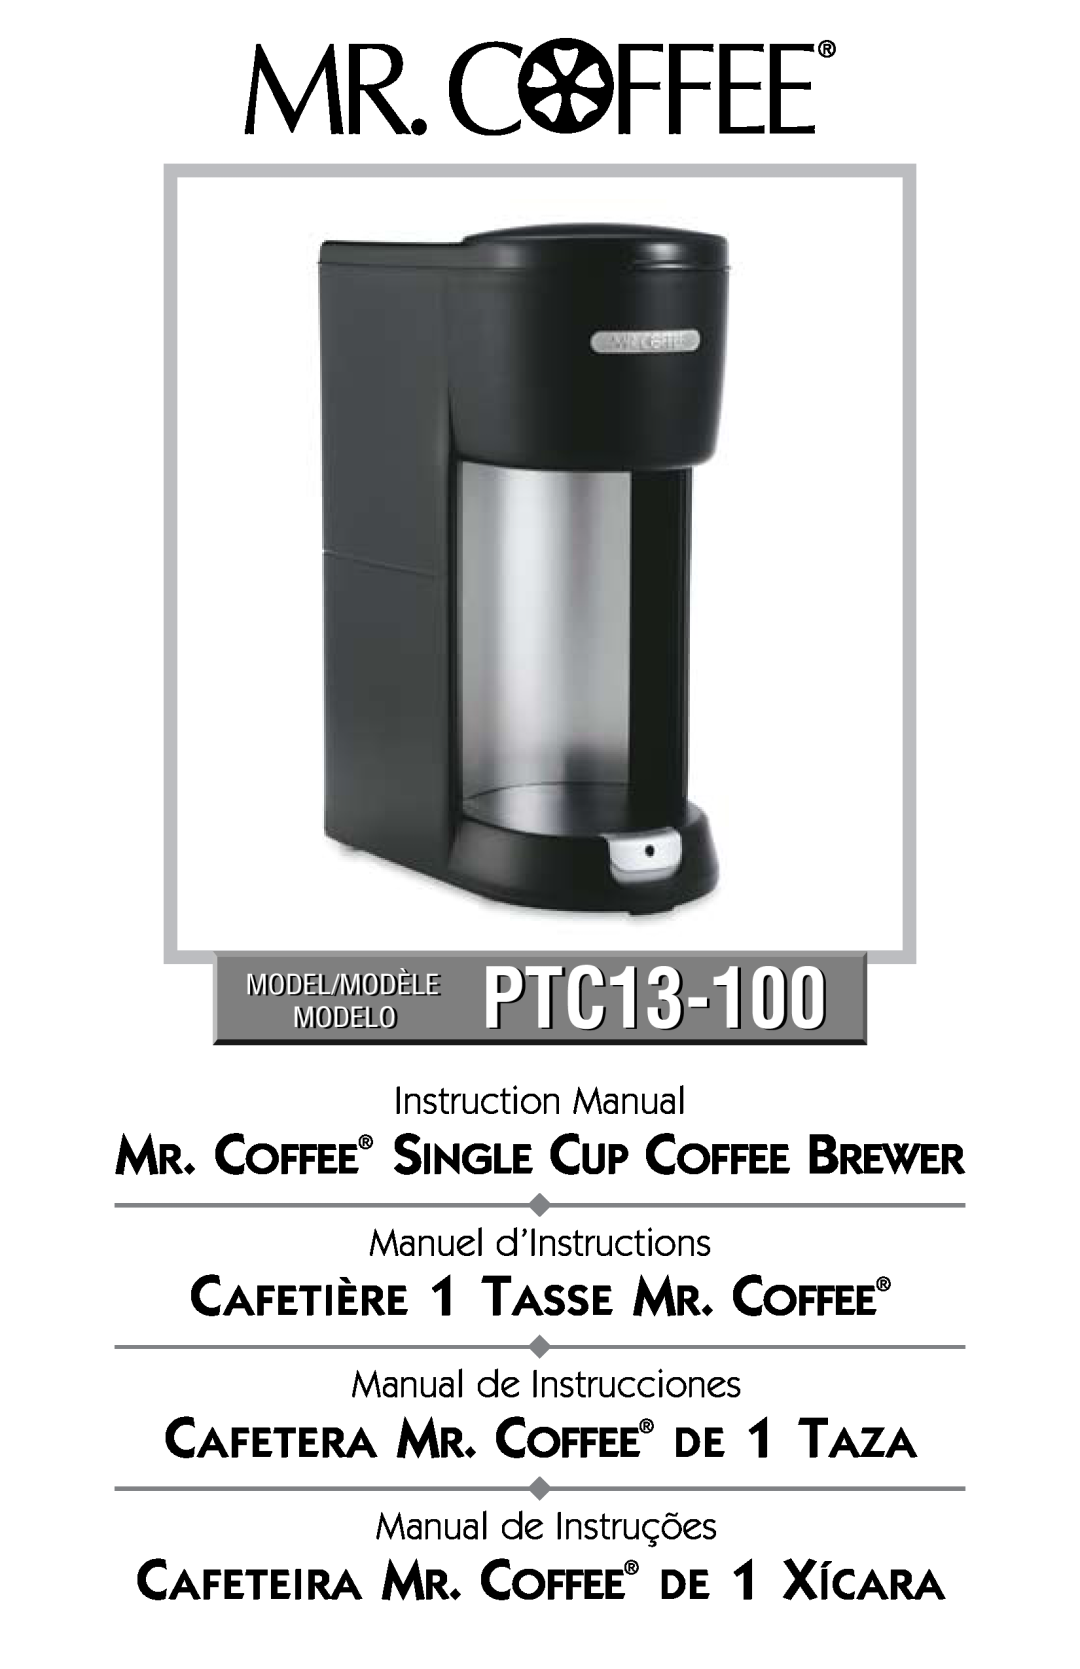 Mr. Coffee PTC13-100 instruction manual Mr. Coffee Single Cup Coffee Brewer, Cafetière 1 Tasse Mr. Coffee 